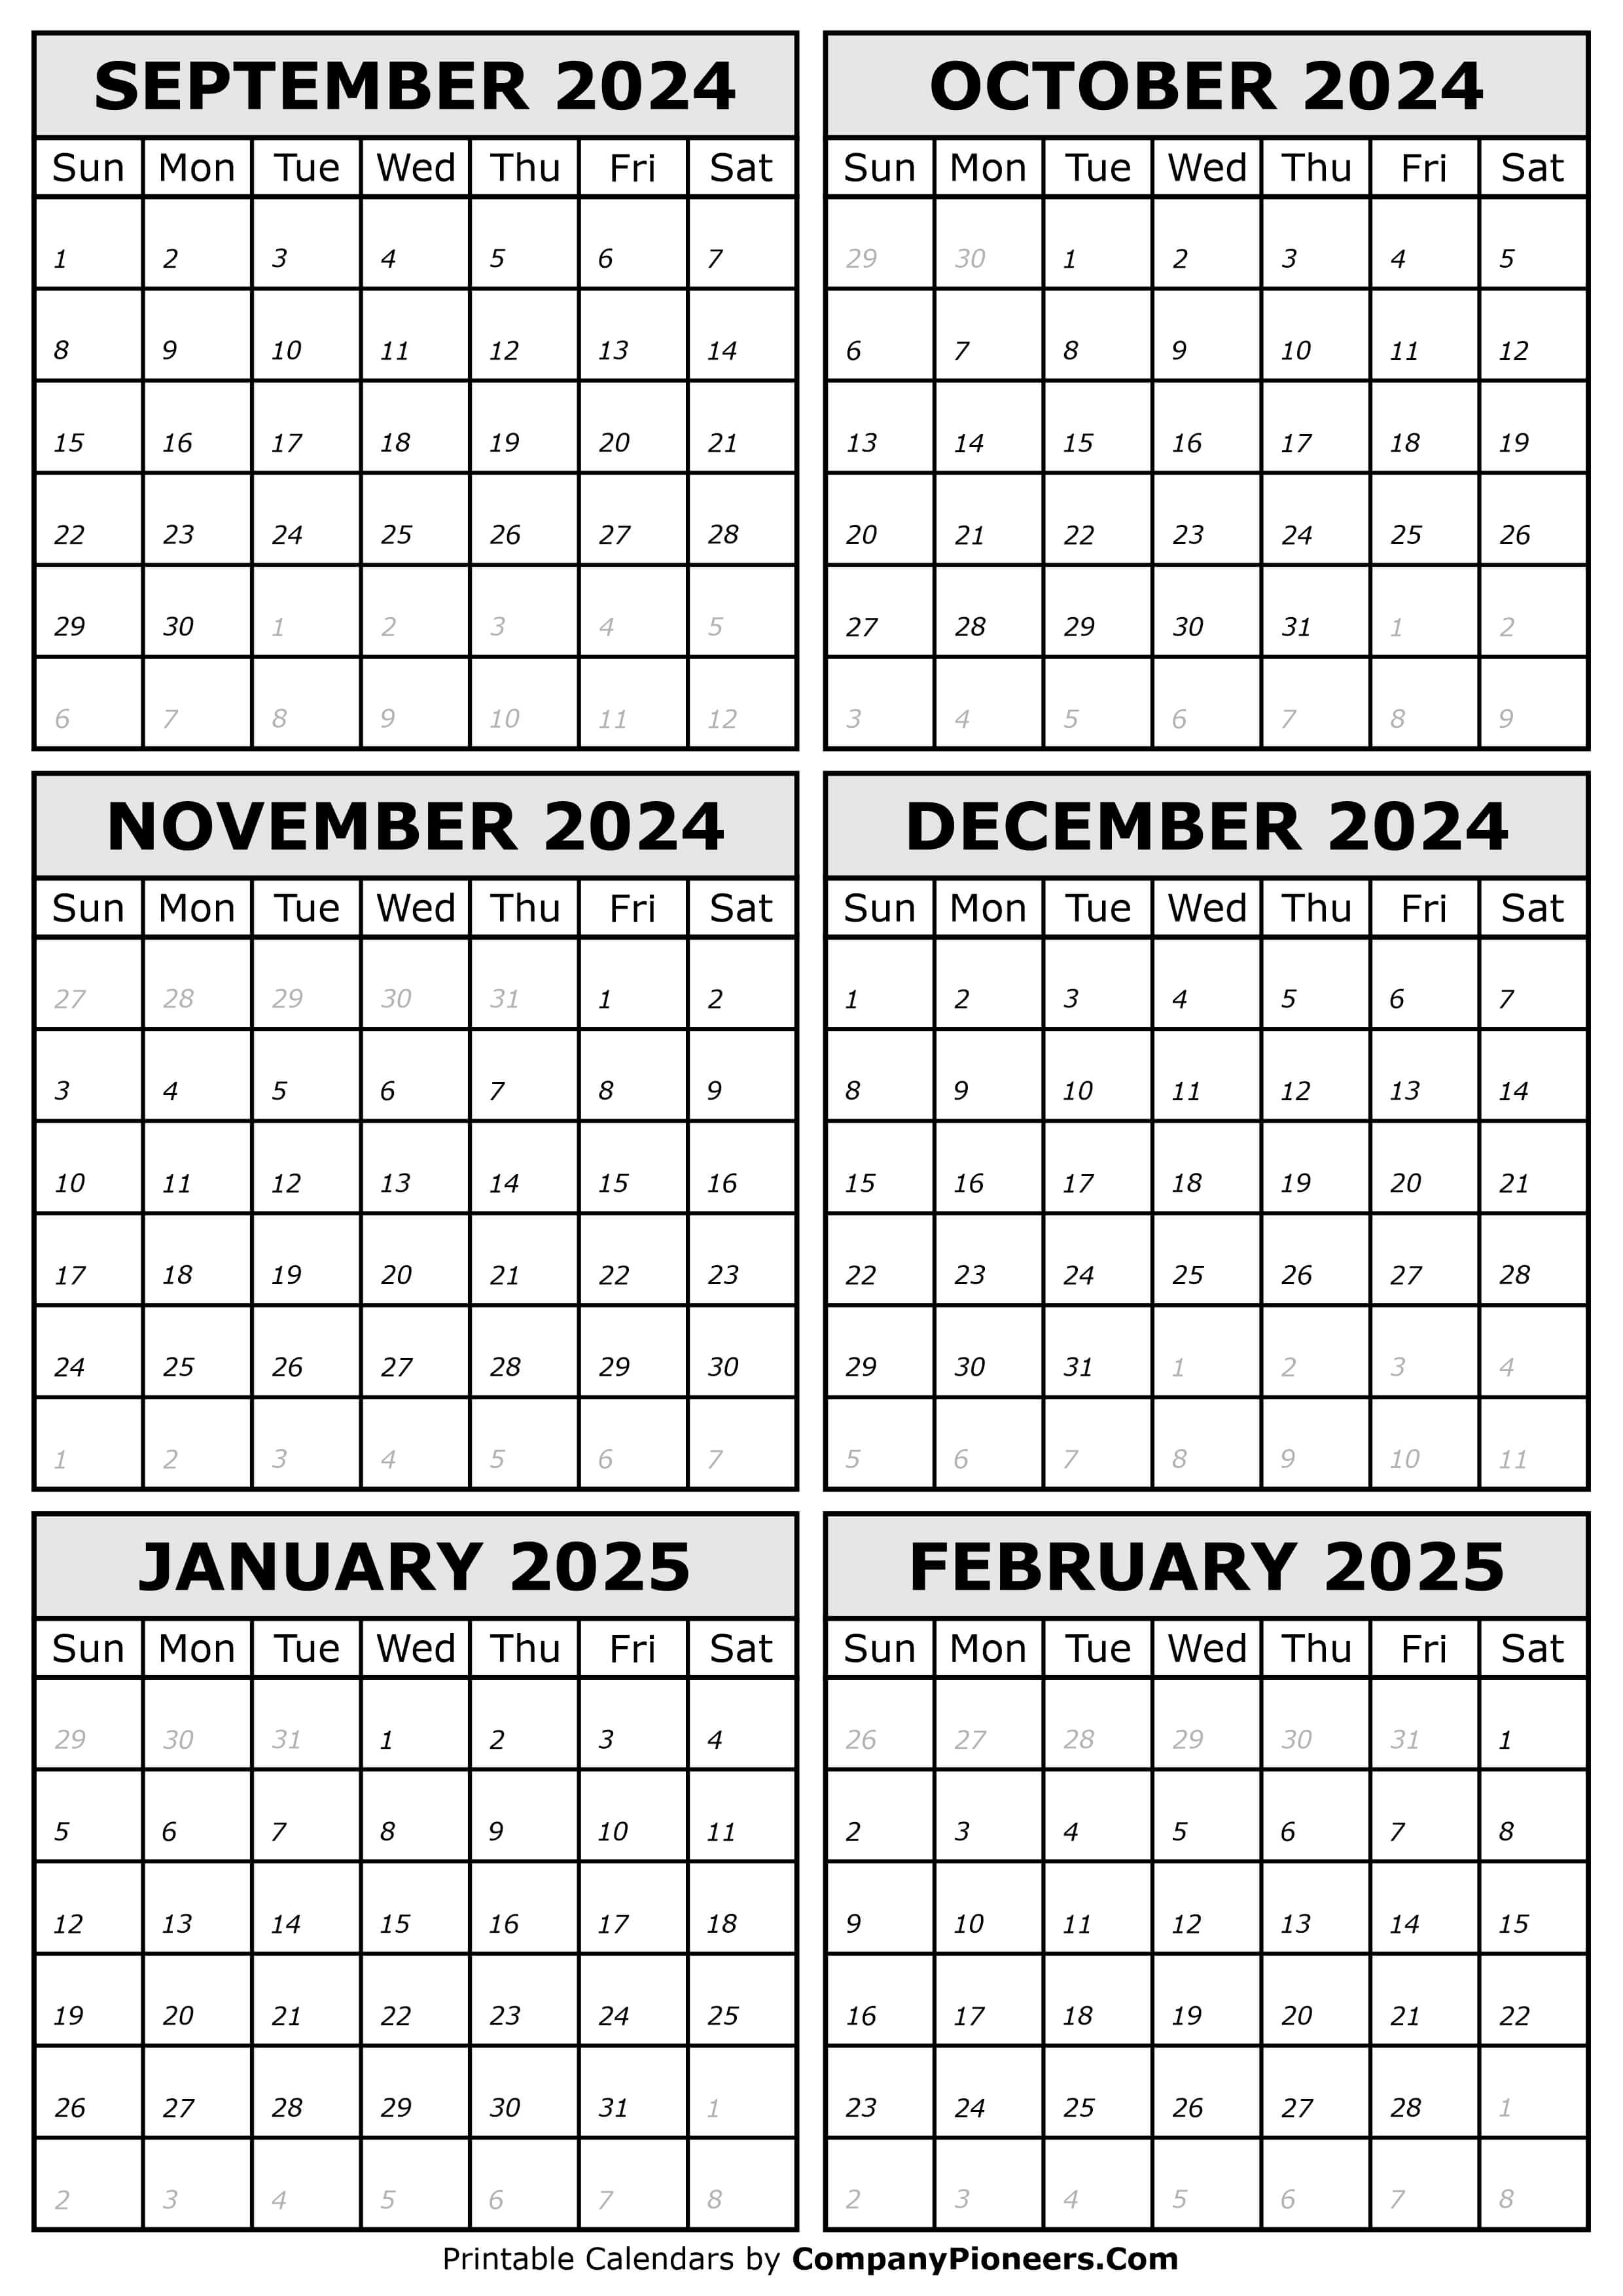 2024 September to 2025 February Calendar